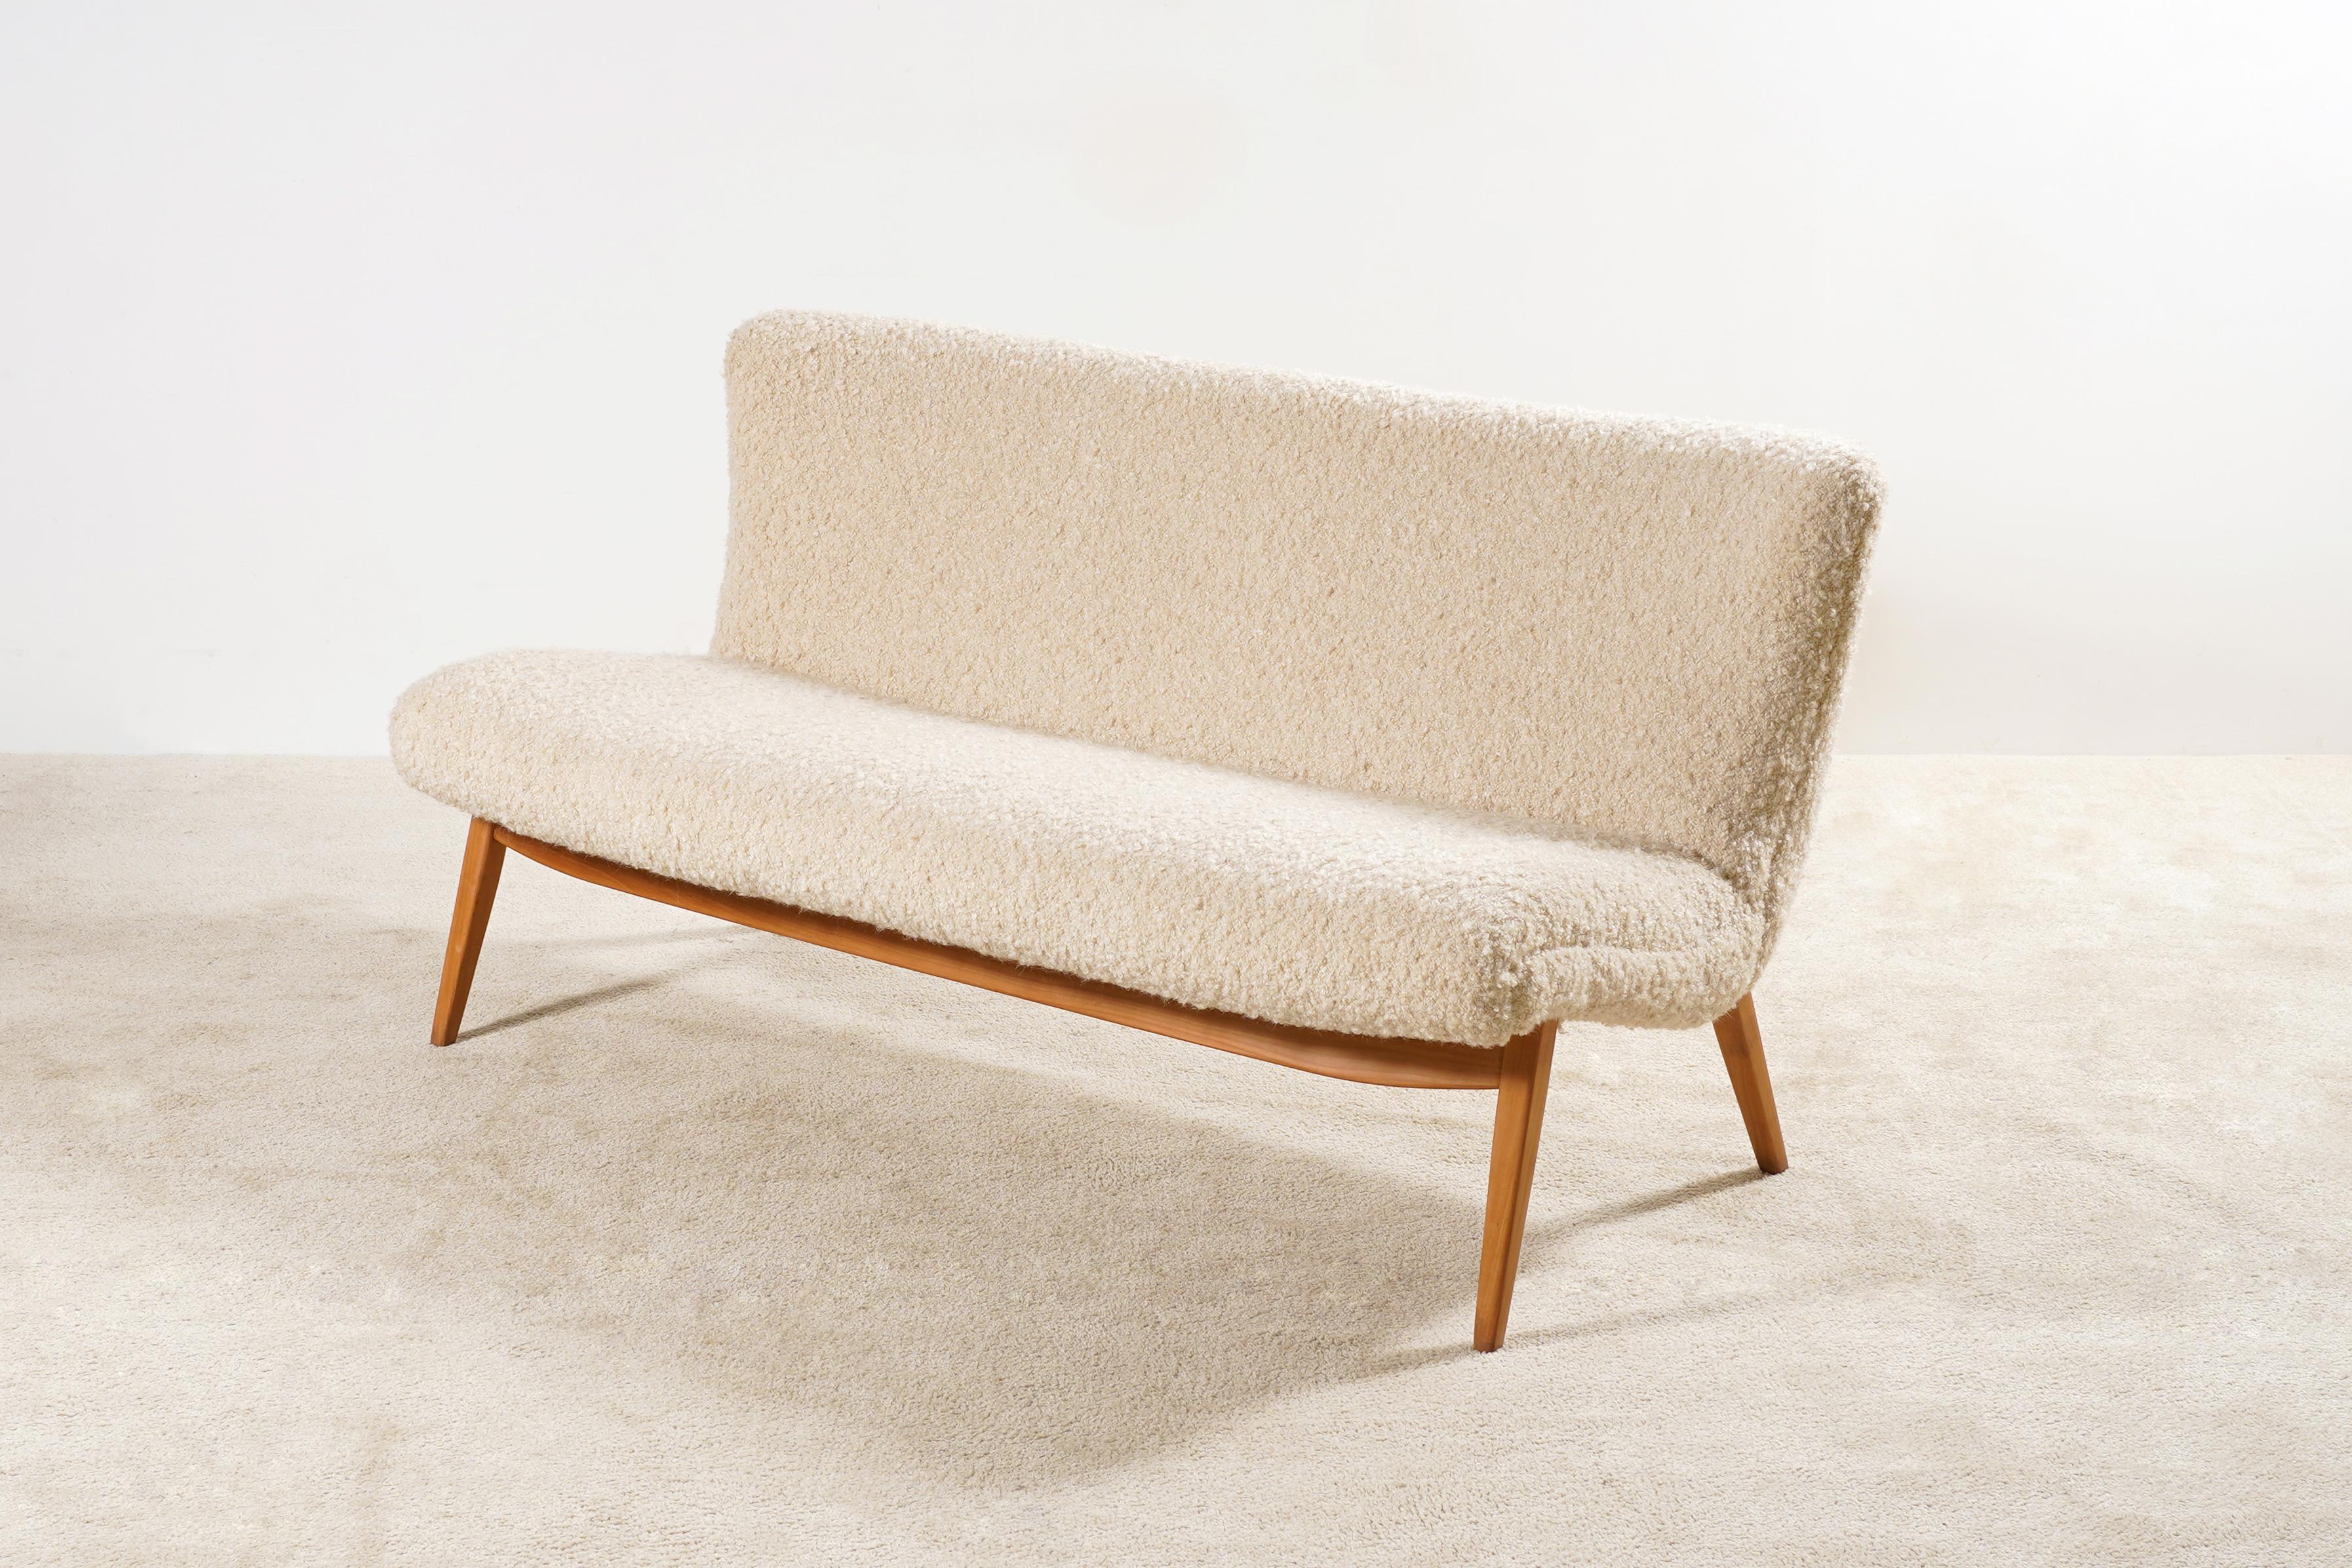 Scandinavian Modern Two-Seat Danish Sofa, Original Piece from the 1950s Newly Upholstered